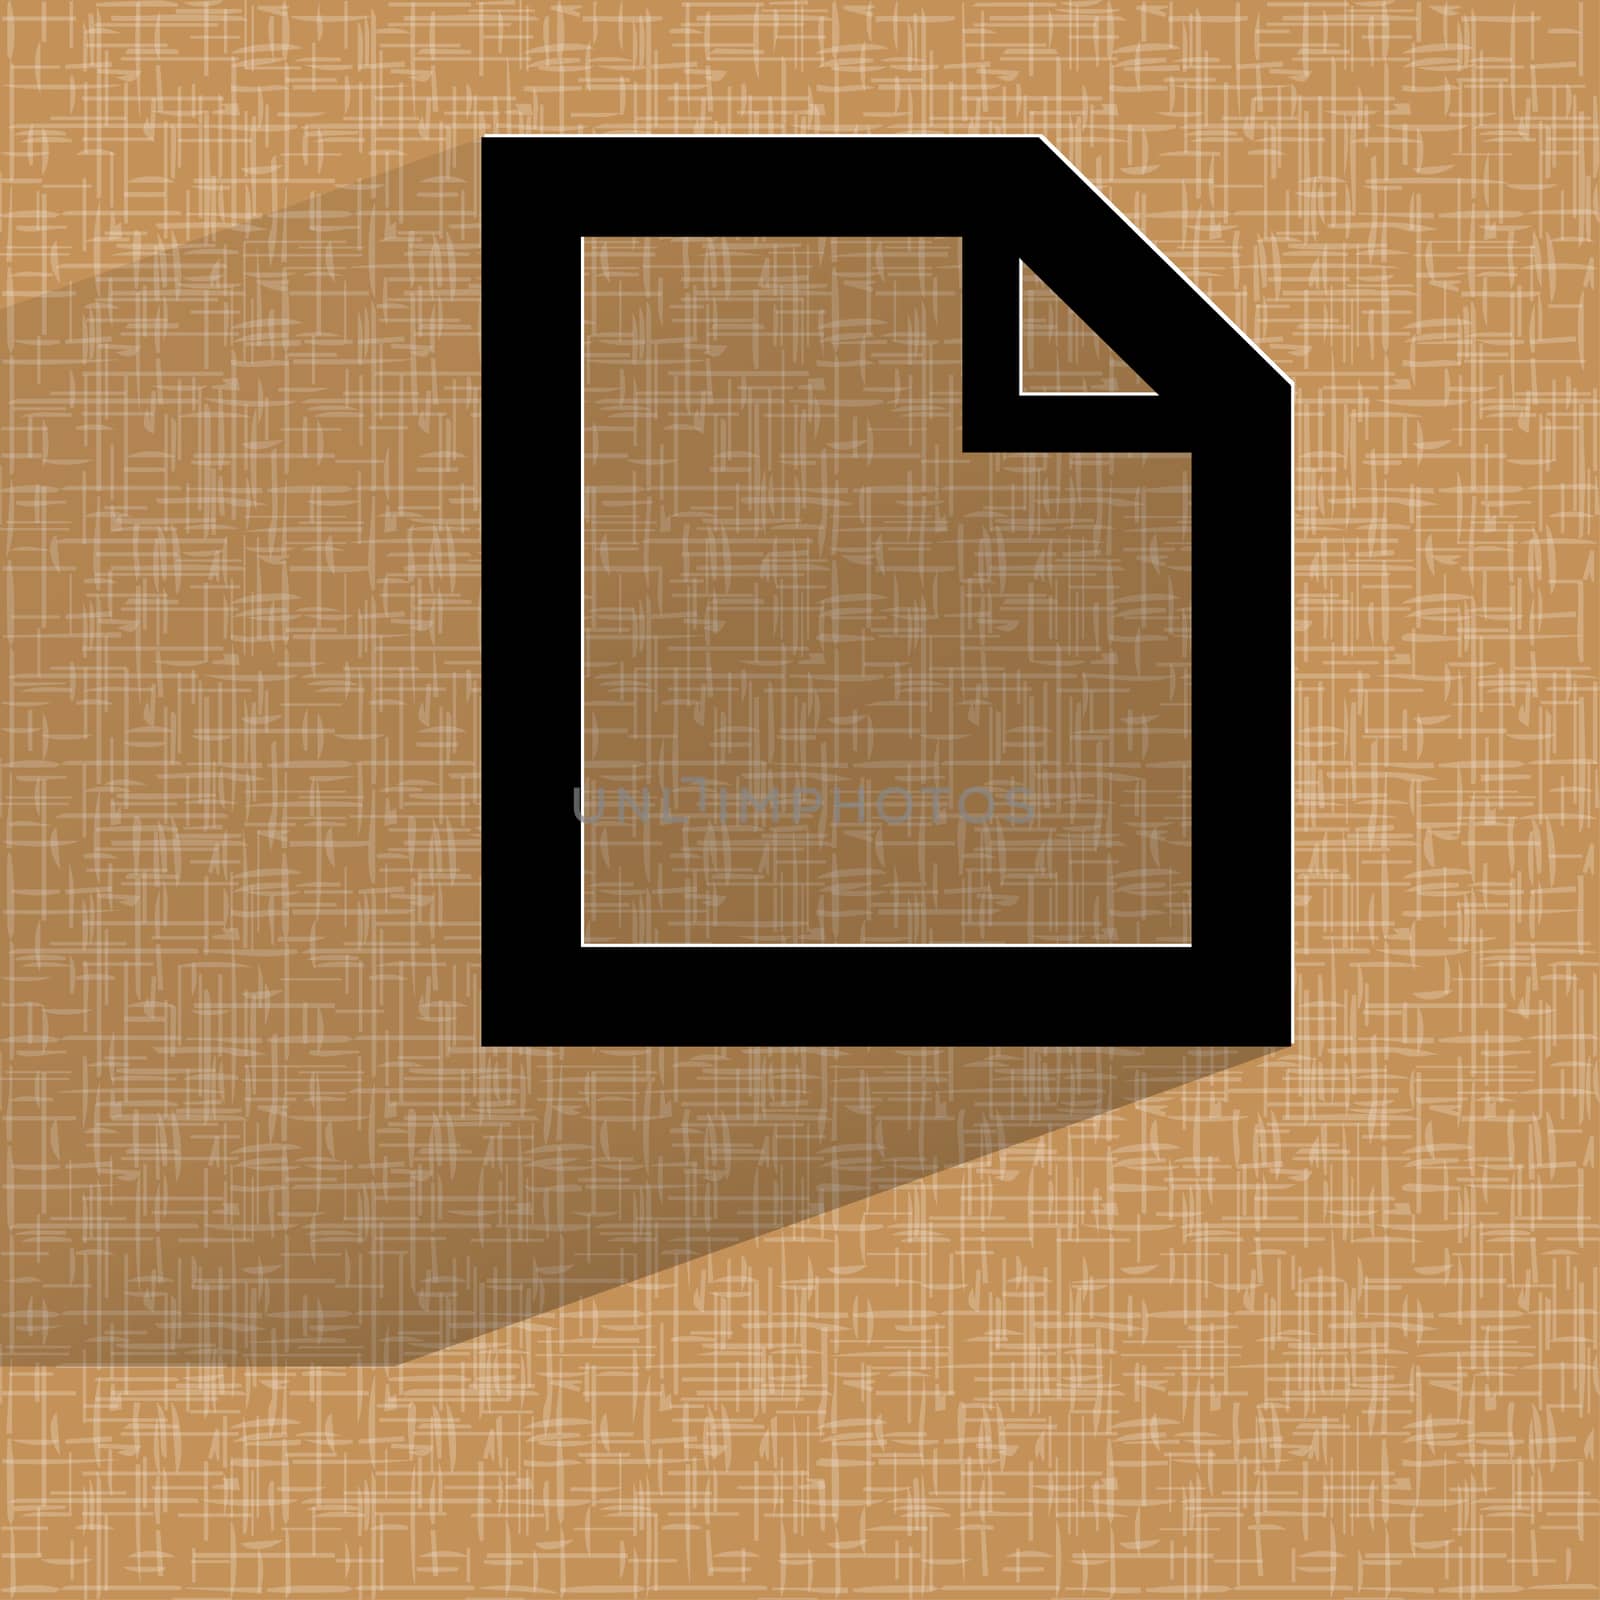 blank paper. Flat modern web design on a flat geometric abstract background by serhii_lohvyniuk